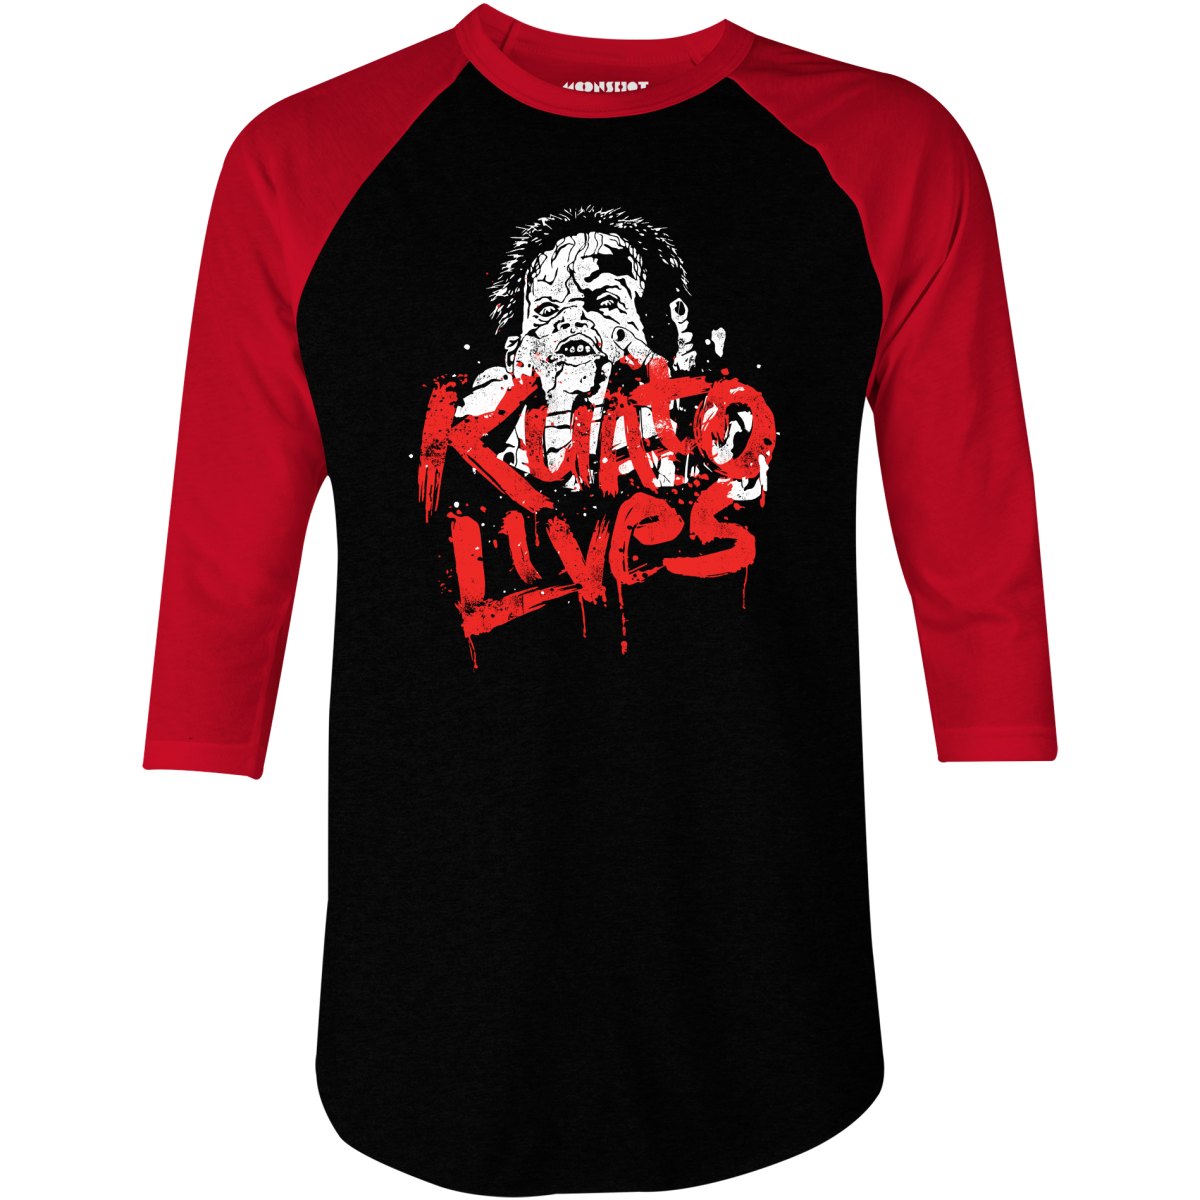 Kuato Lives - Total Recall - 3/4 Sleeve Raglan T-Shirt